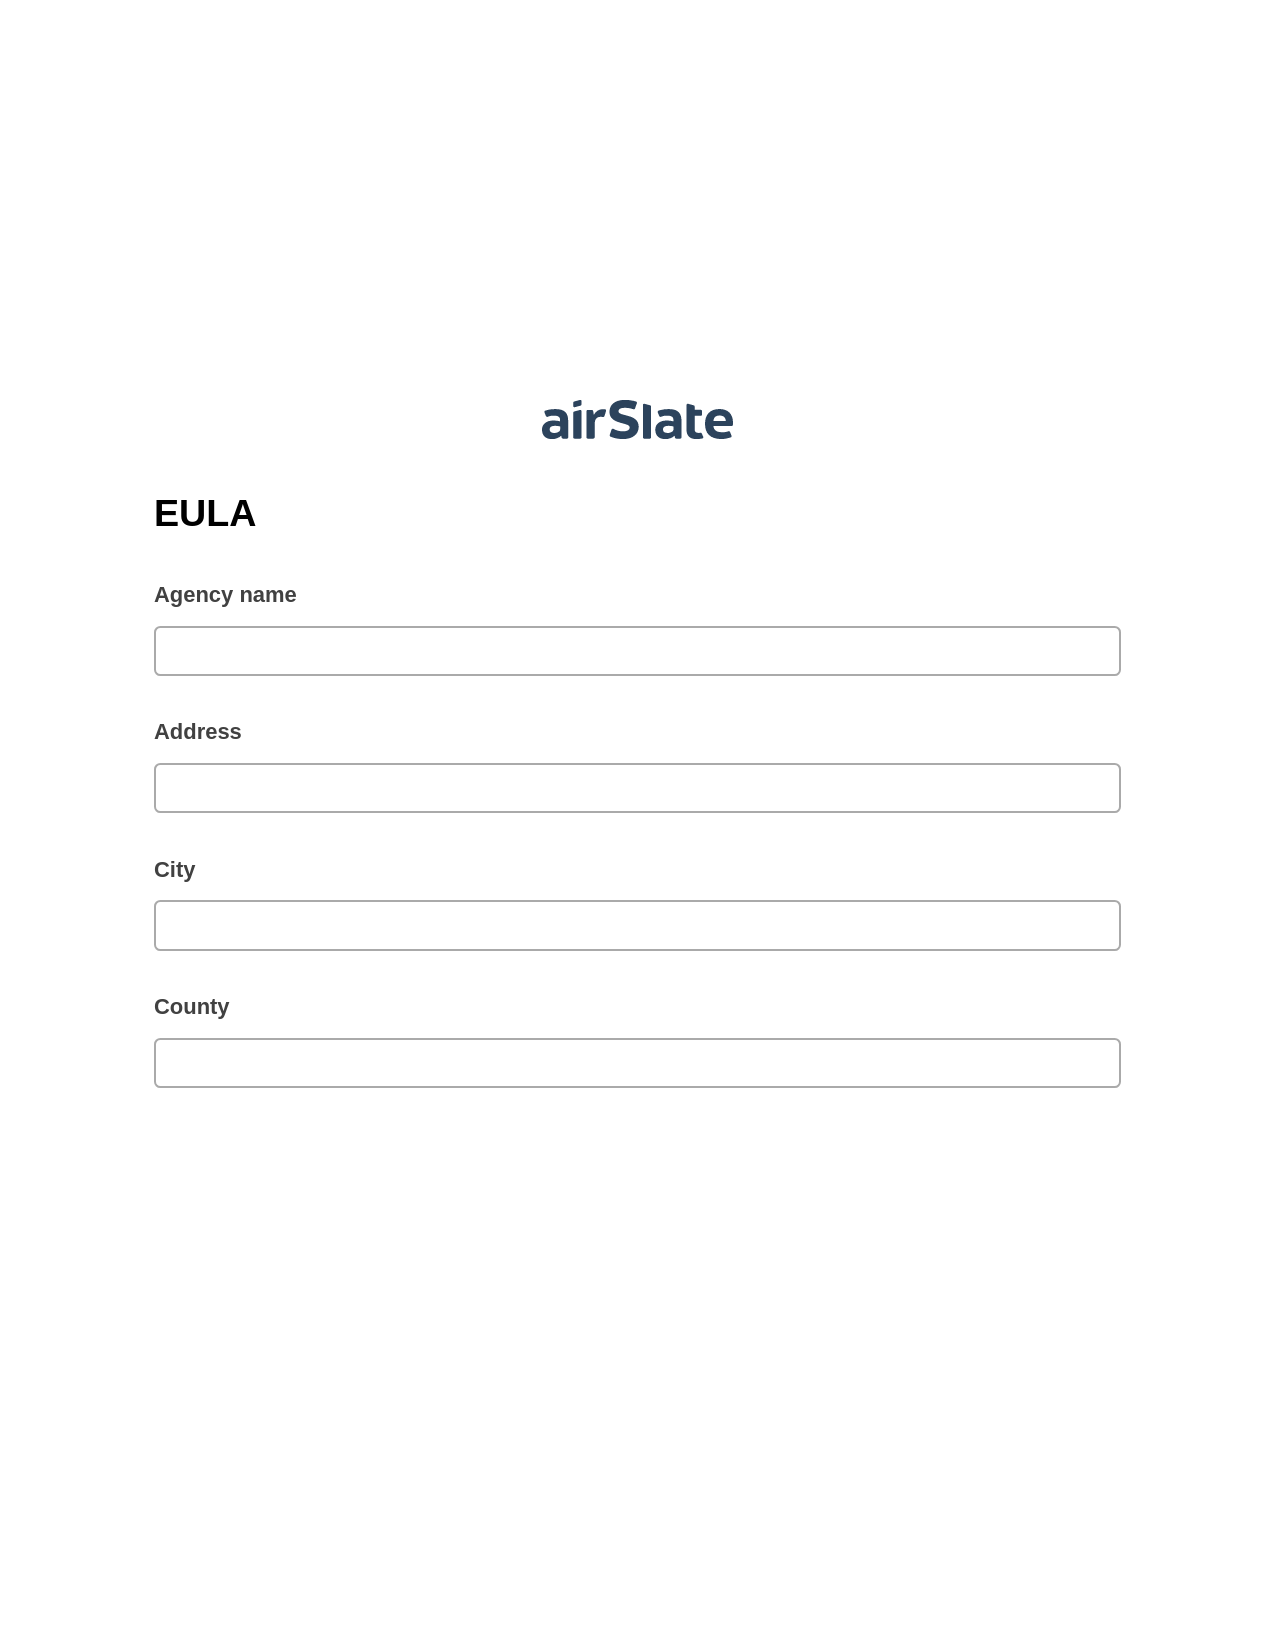 EULA Pre-fill from CSV File Dropdown Options Bot, Set signature type addon, Dropbox Bot